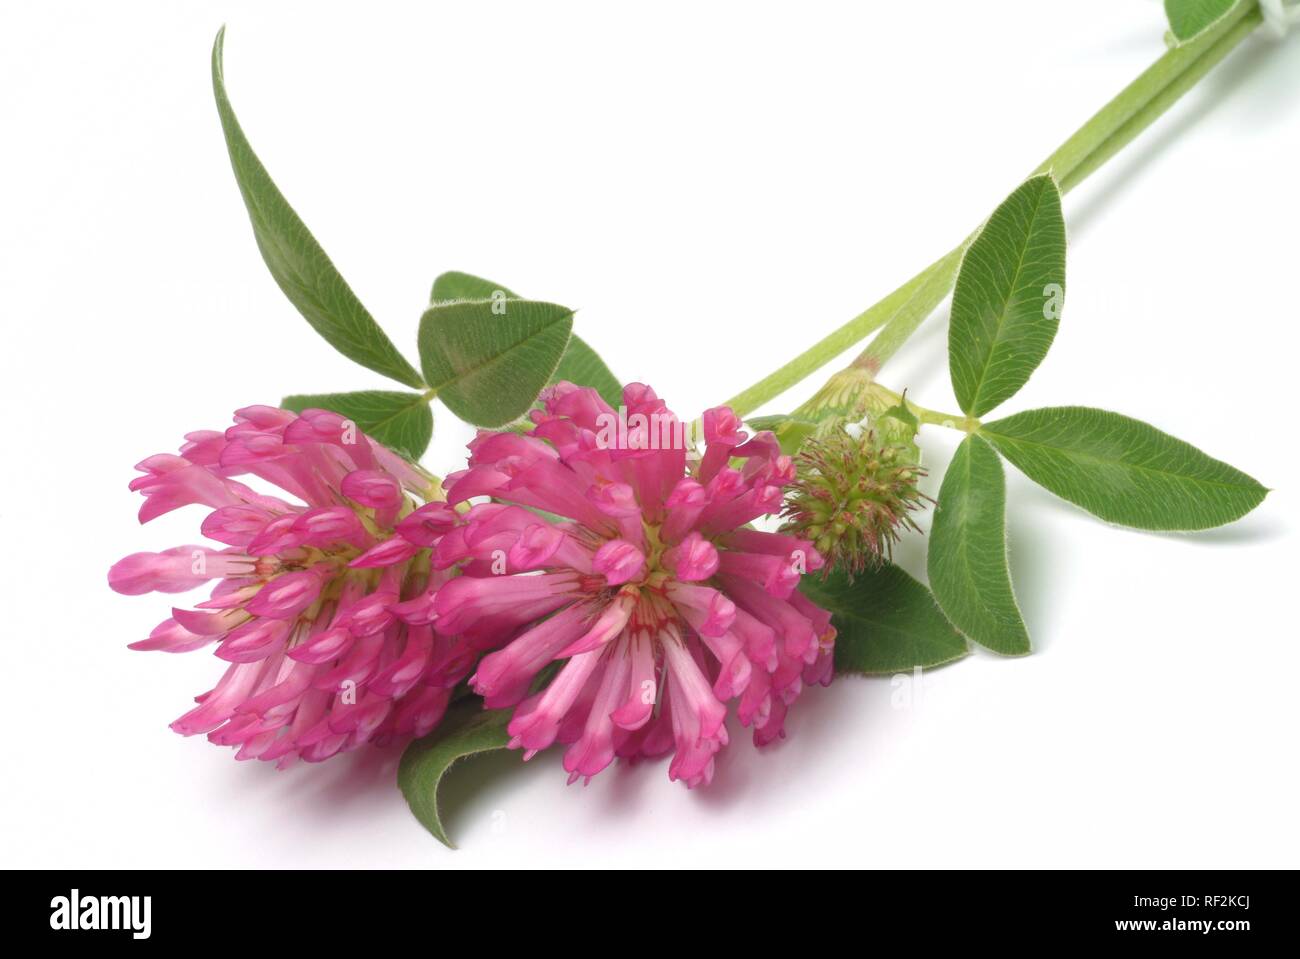 Red Clover (Trifolium pratense), medicinal plant Stock Photo